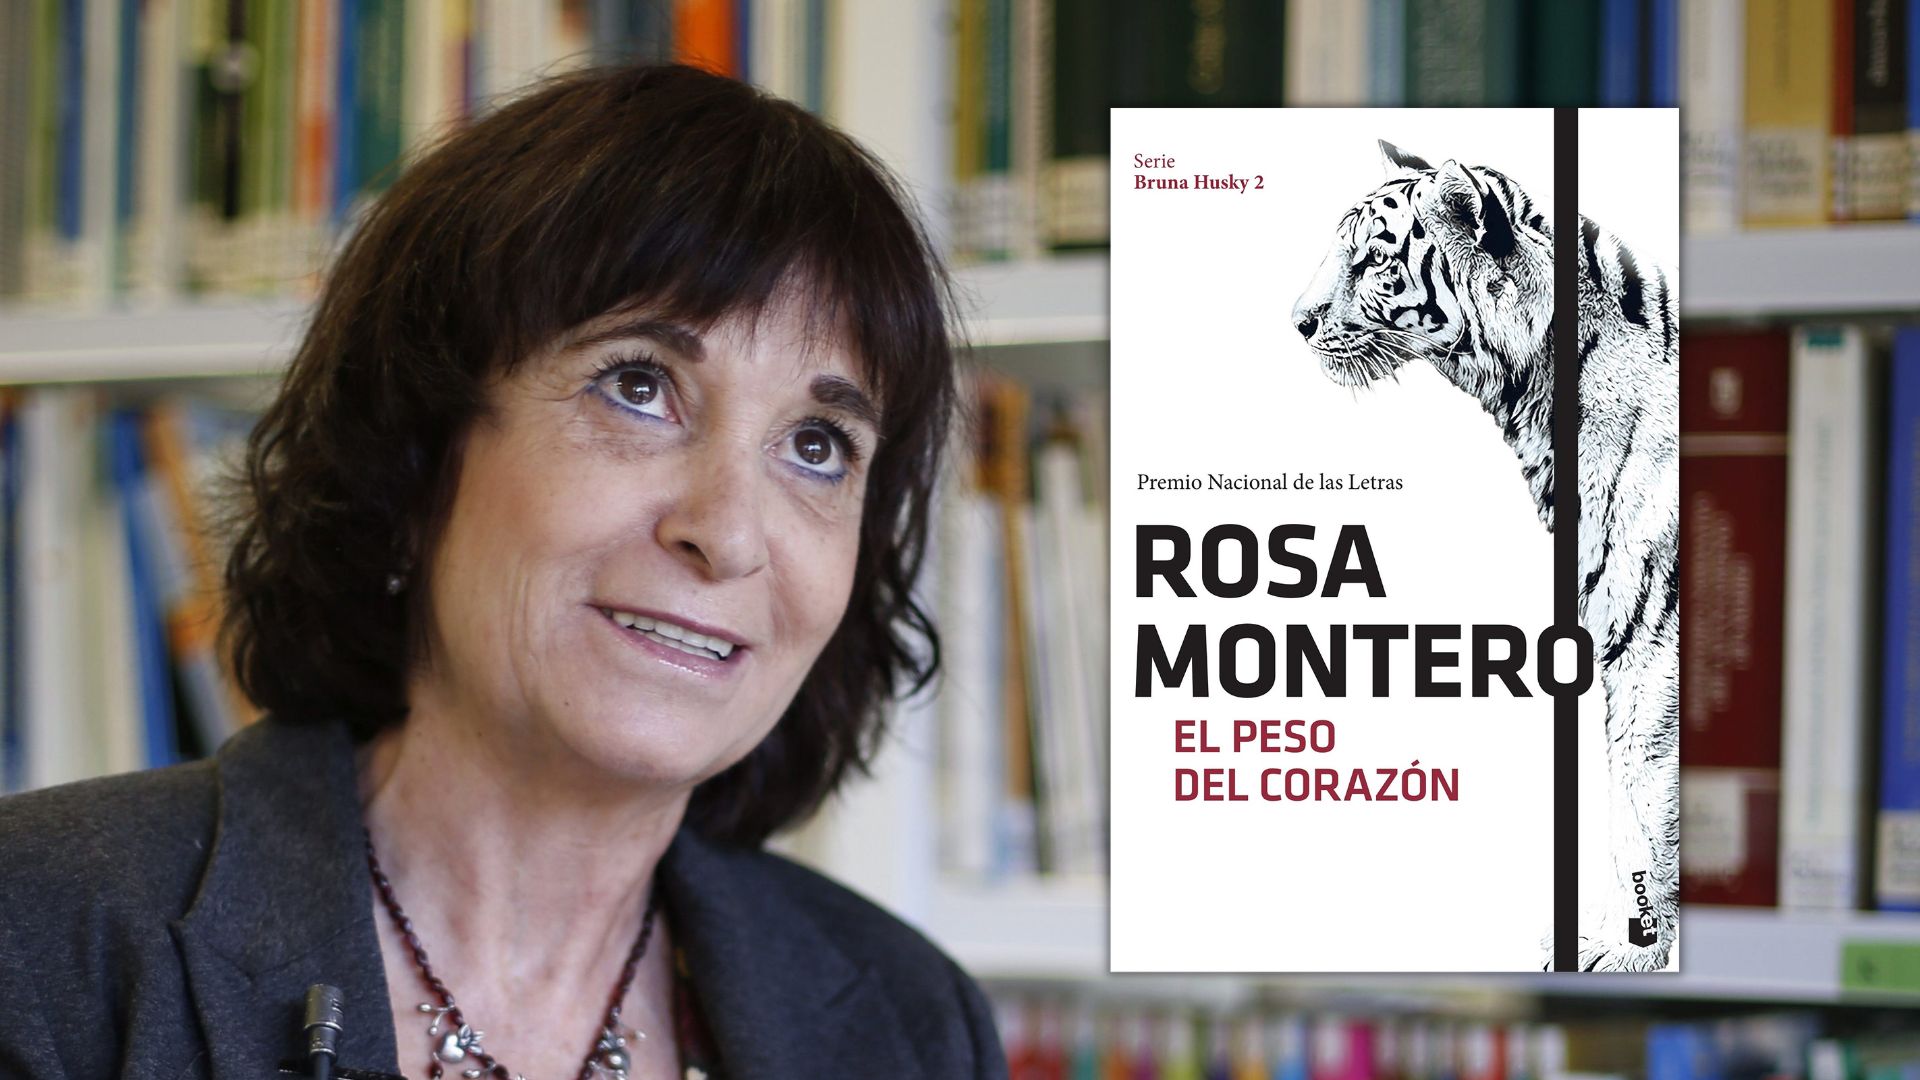 Libros que iluminan el mundo, por Rosa Montero - Librotea